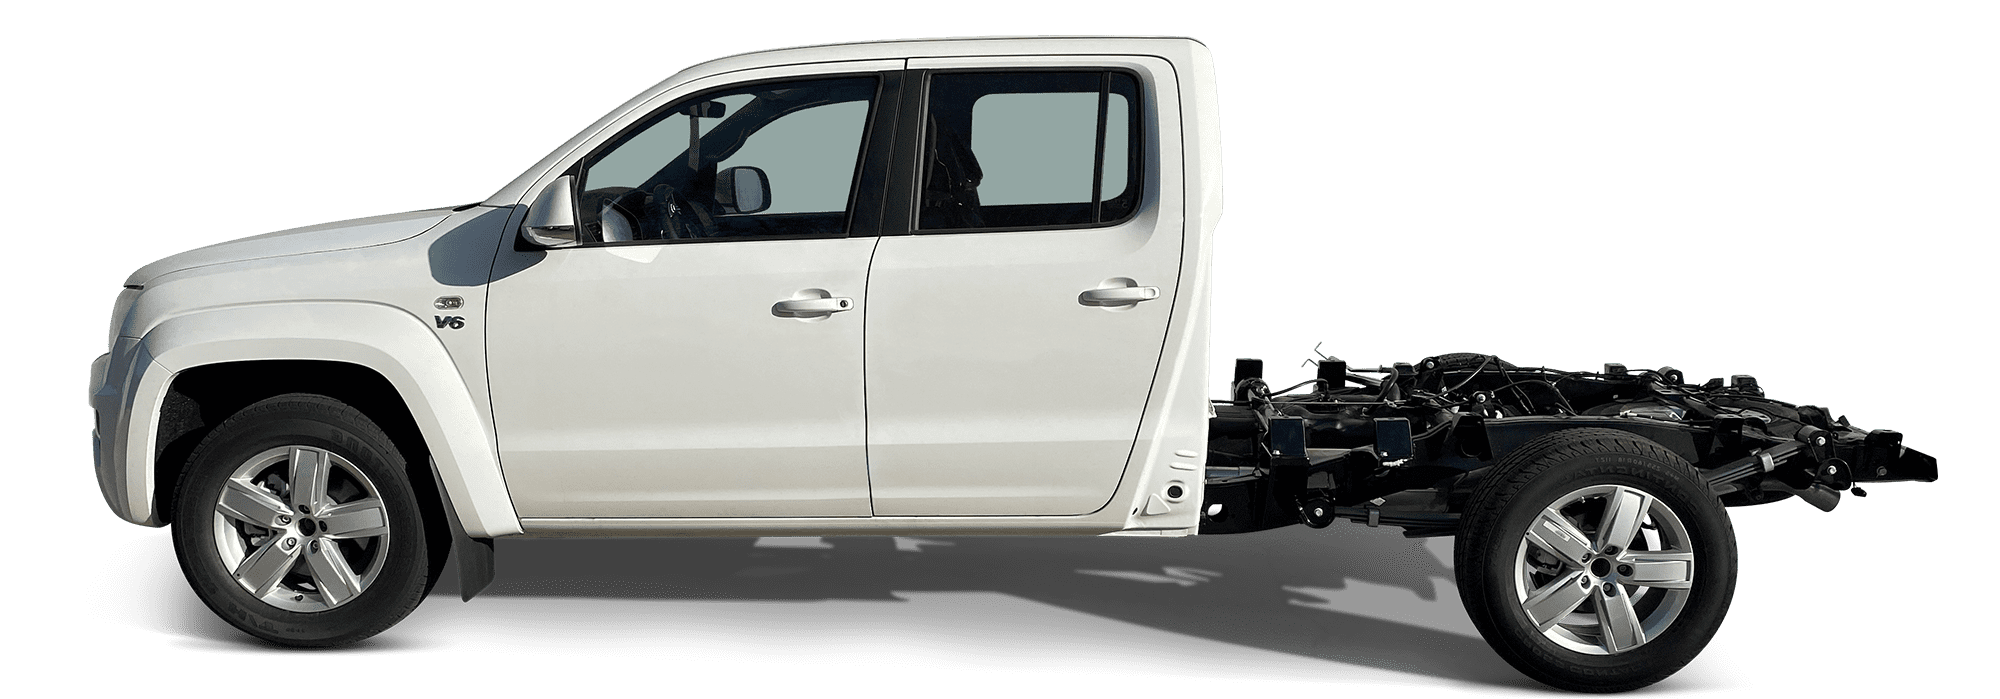 Volkswagen Amarok Cab Chassis